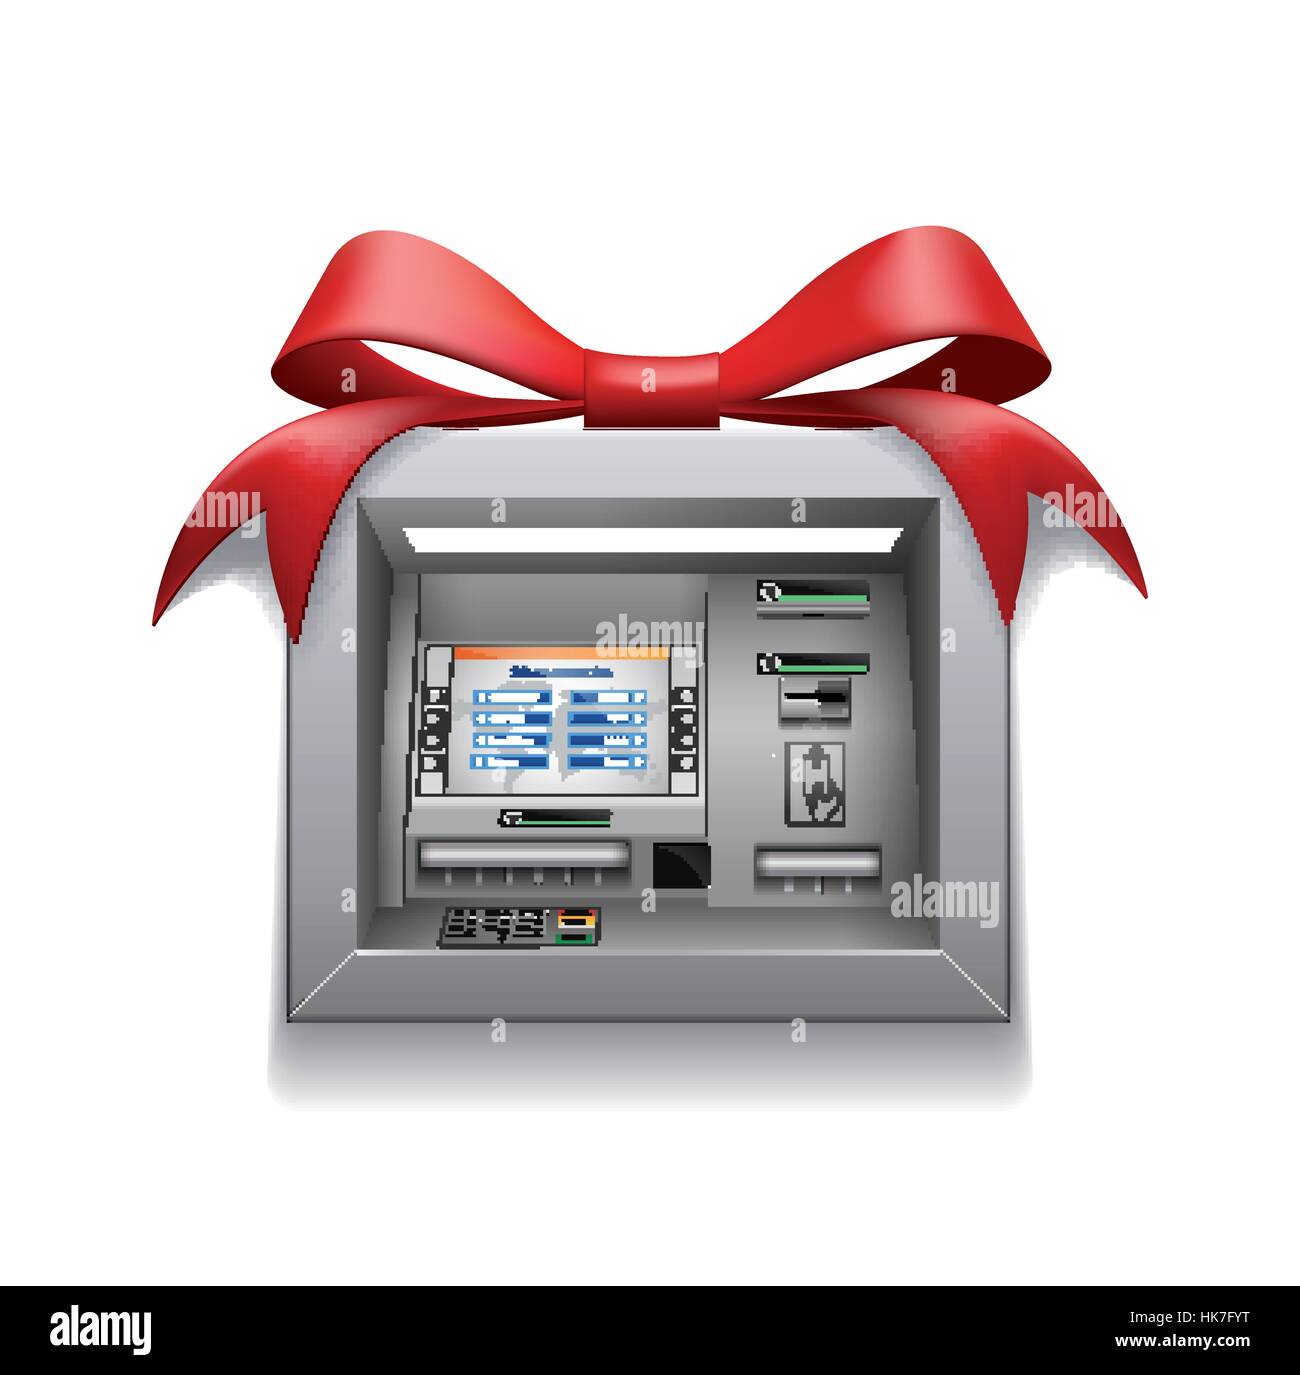 ATM - Automated teller machine - worldwide finances Stock Vector